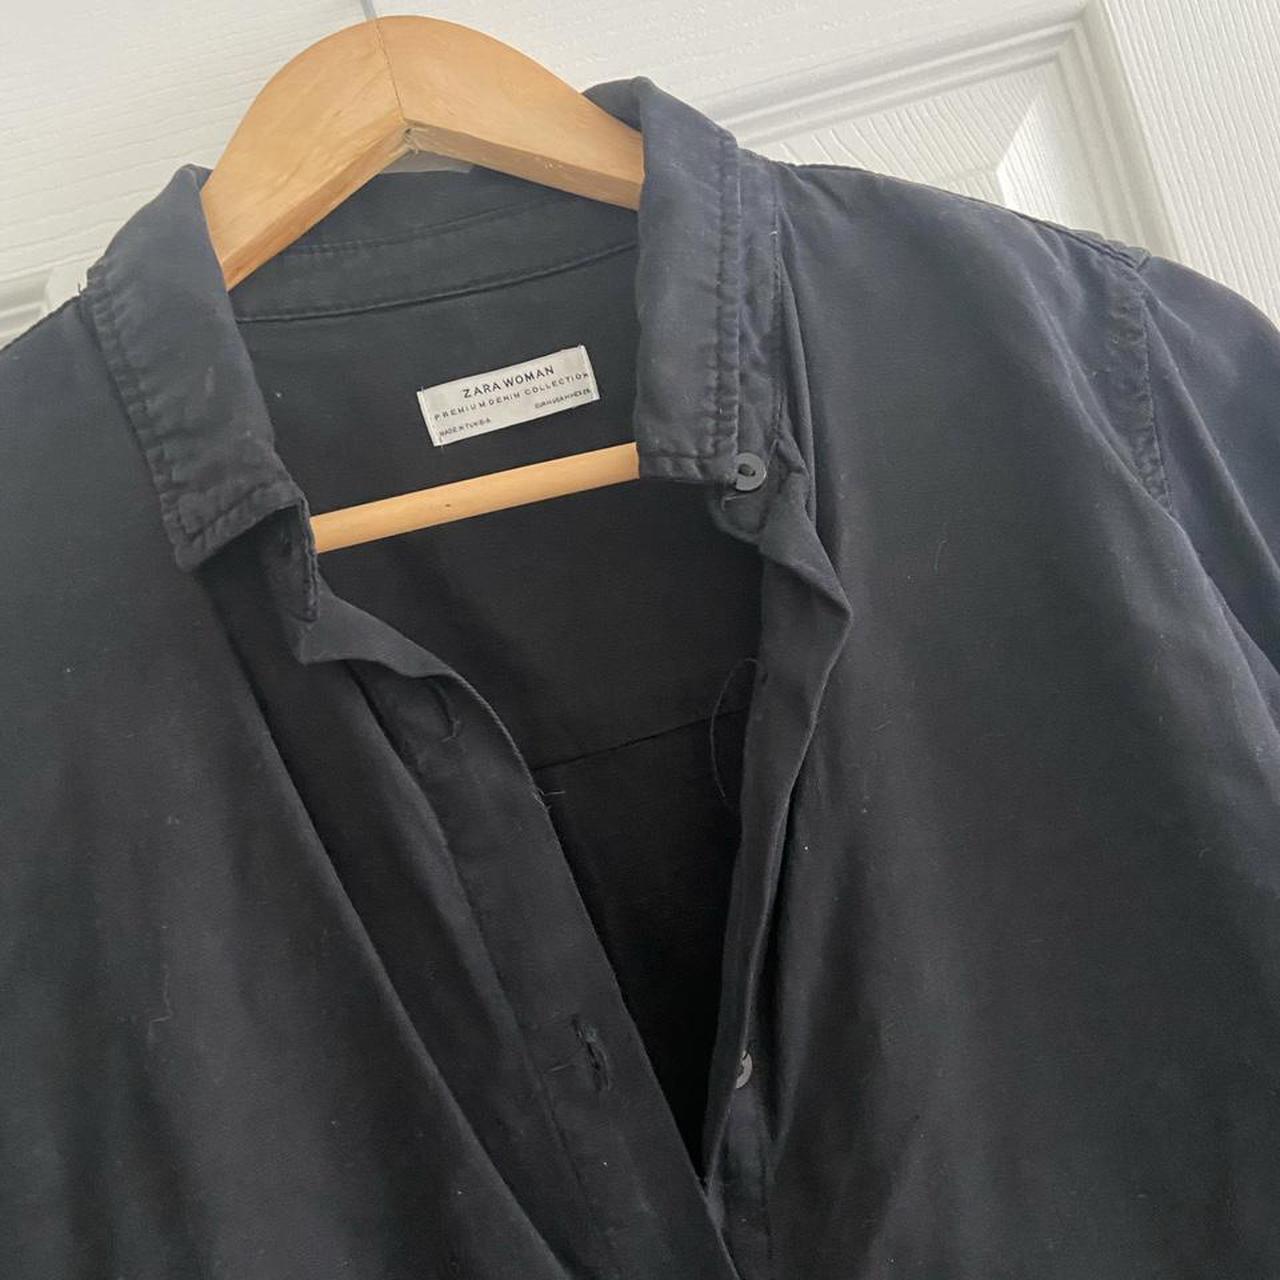 Zara Woman black shirt dress size M. Great... - Depop